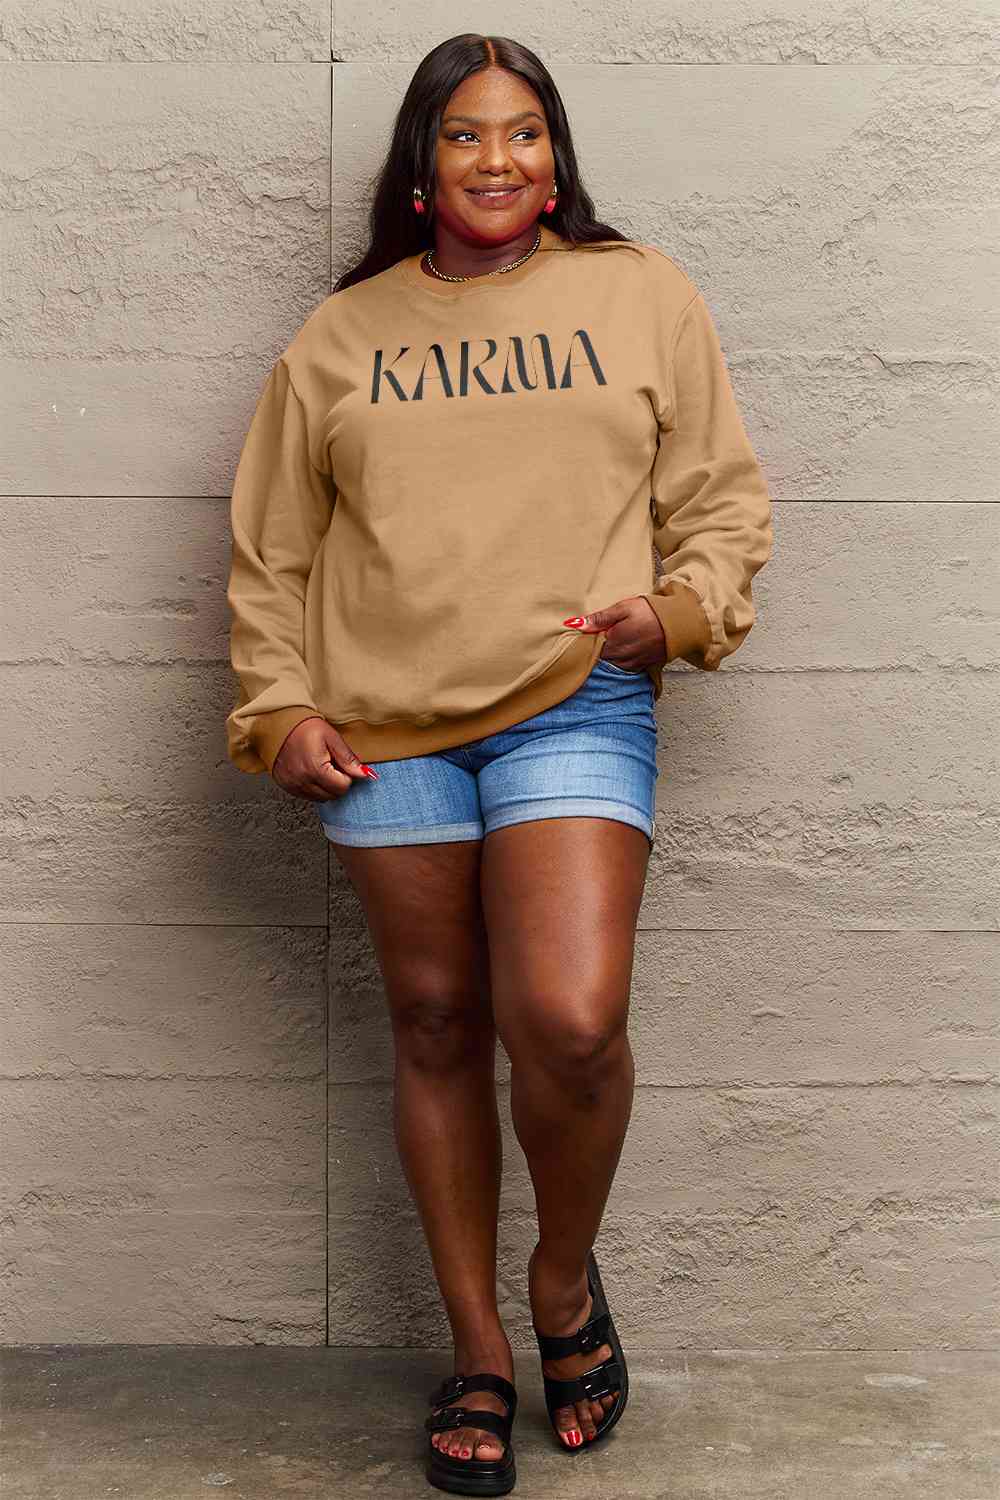 Simply Love Full Size KARMA Graphic Sweatshirt Ti Amo I love you